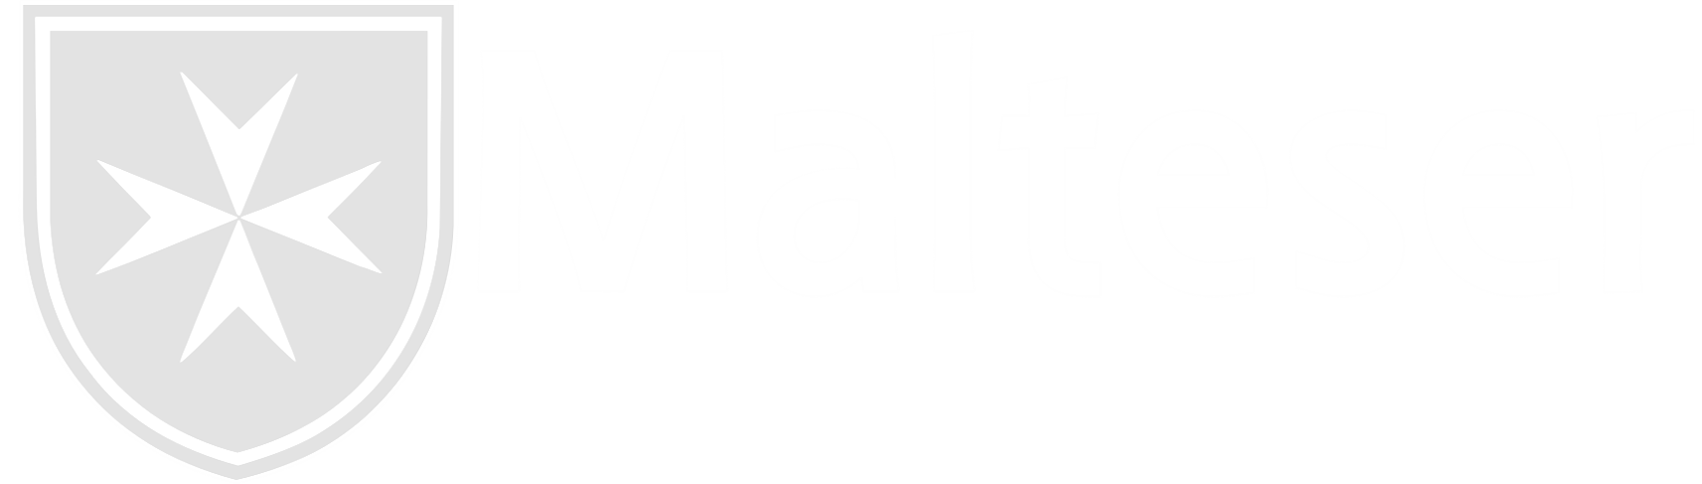 Malteser weiss 1-1